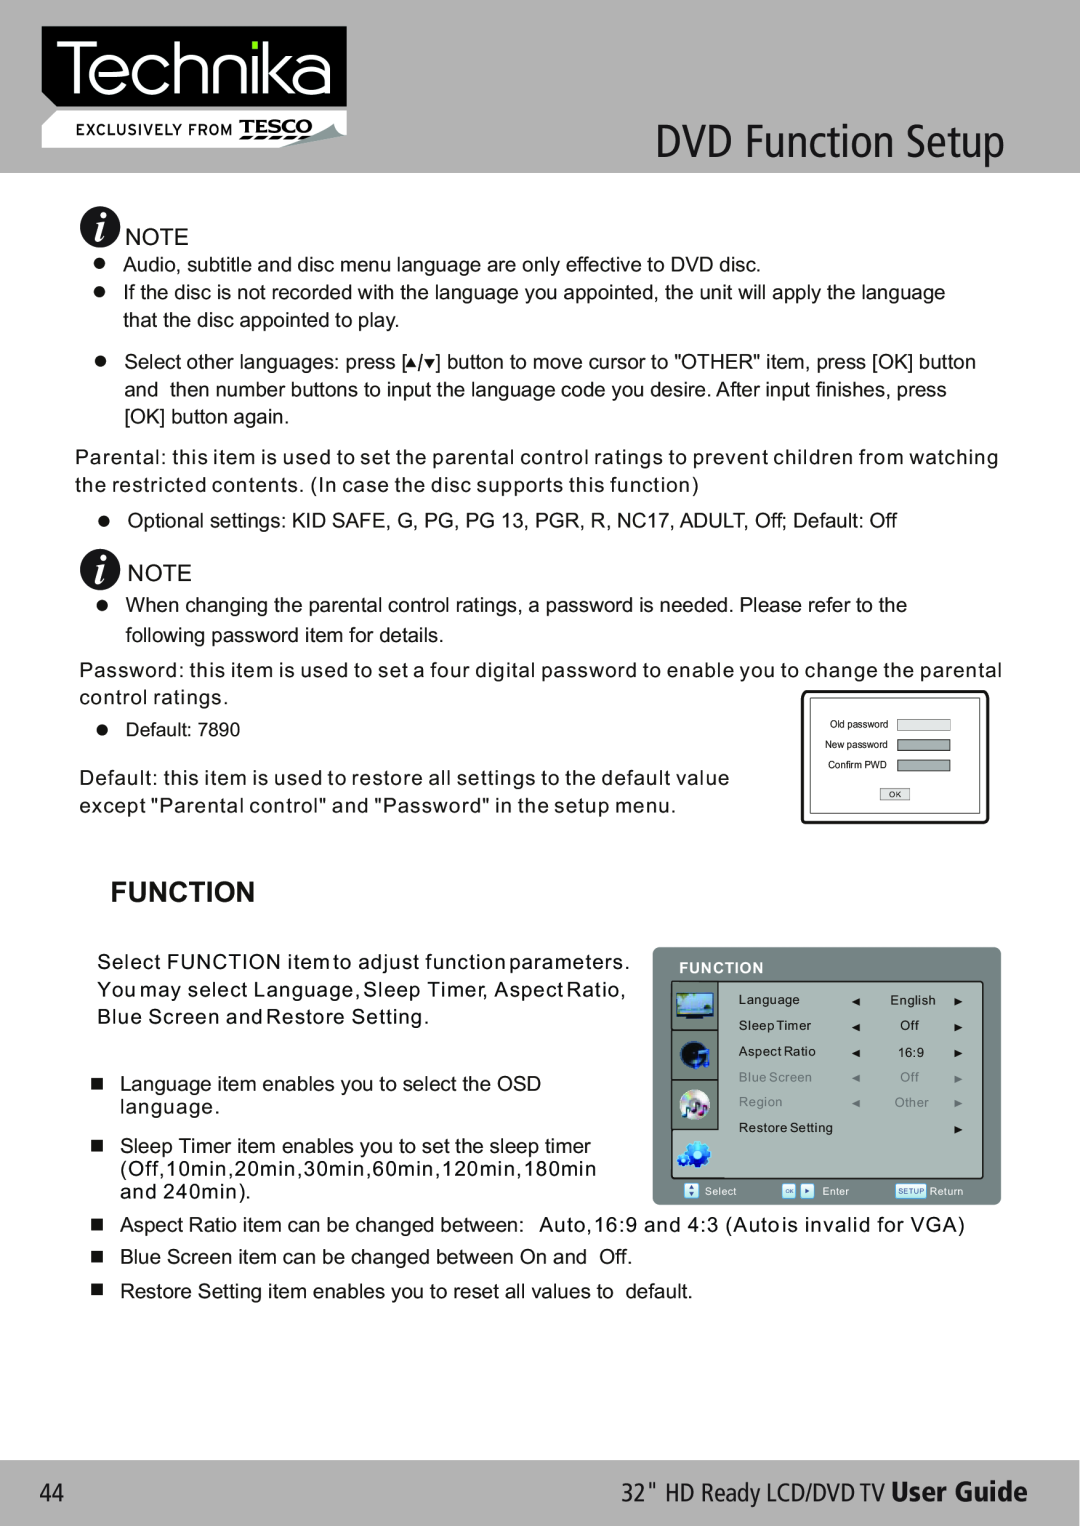 Technika 32-612 manual DVD Function Setup, HD Ready LCD/DVD TV User Guide, Default 